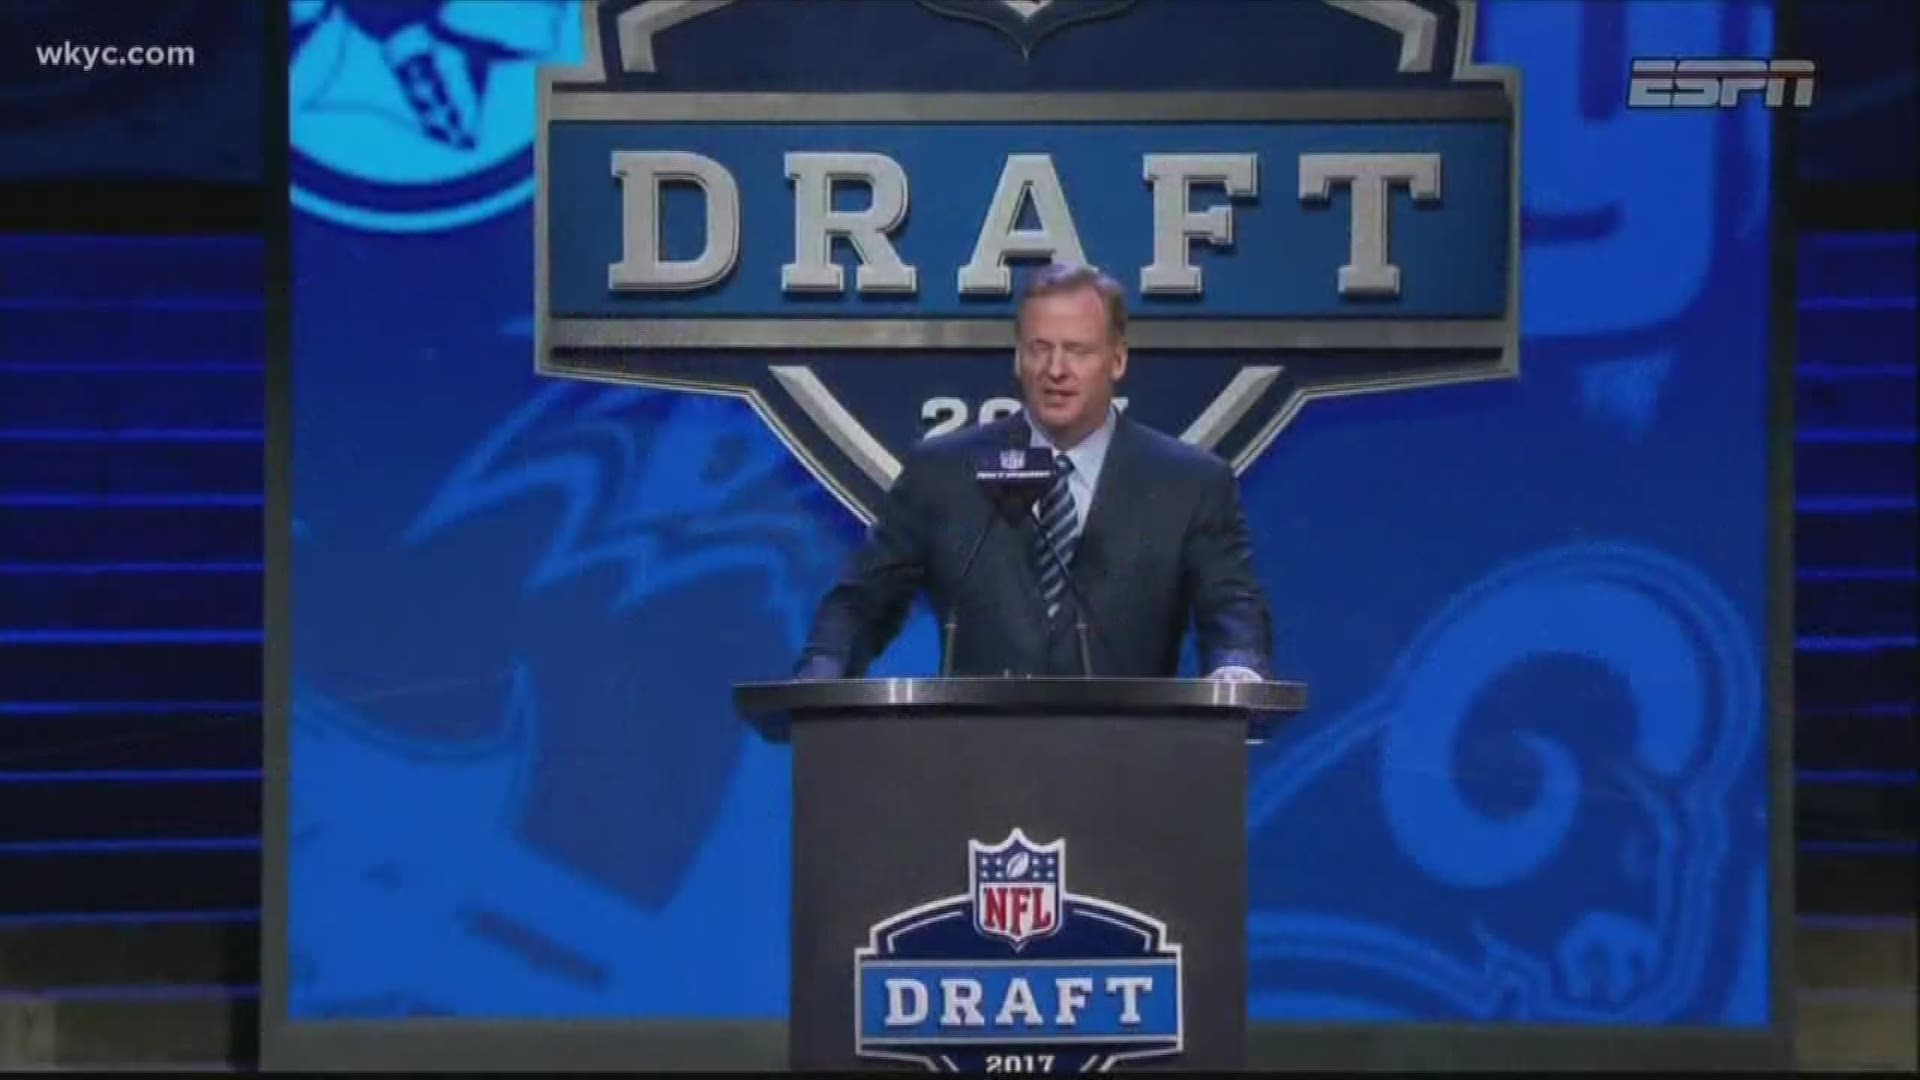 NEO will not host NFL draft